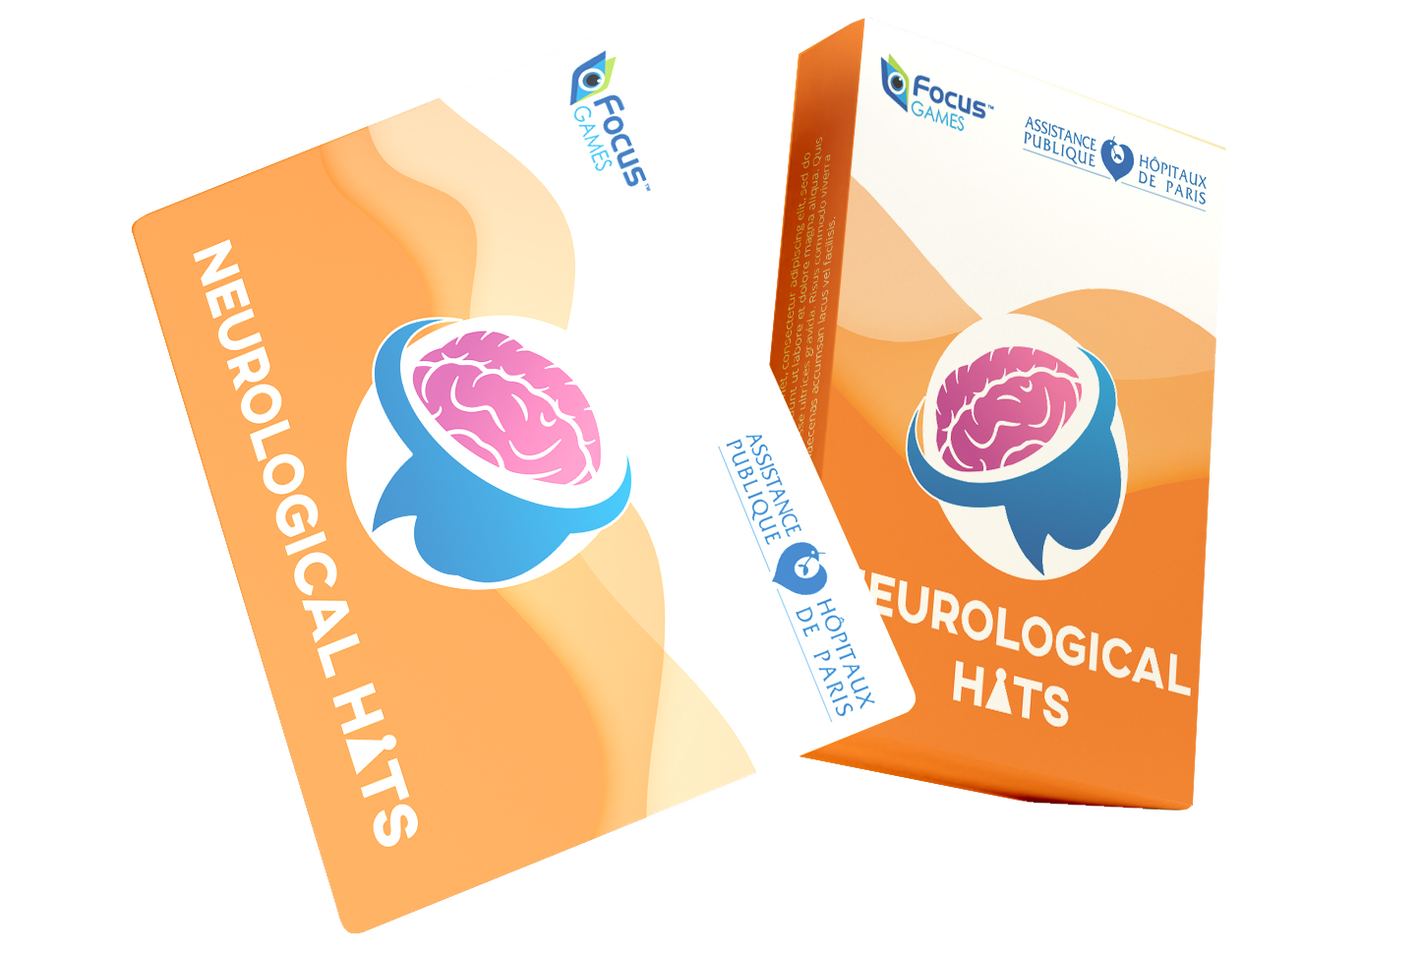 Neurological Hats